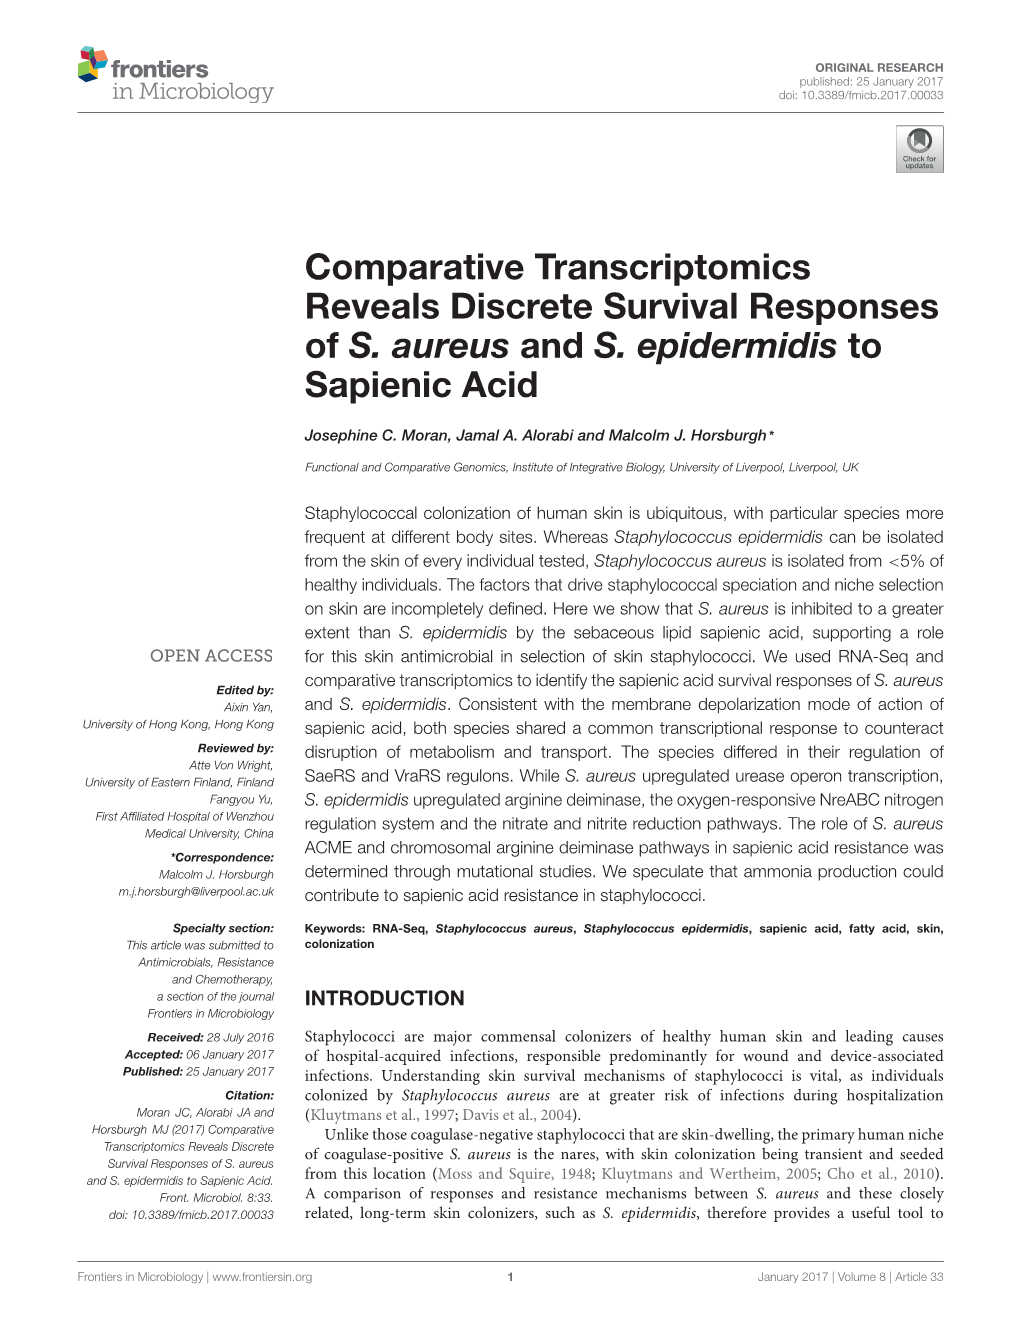 Comparative Transcriptomics Reveals Discrete Survival Responses of S